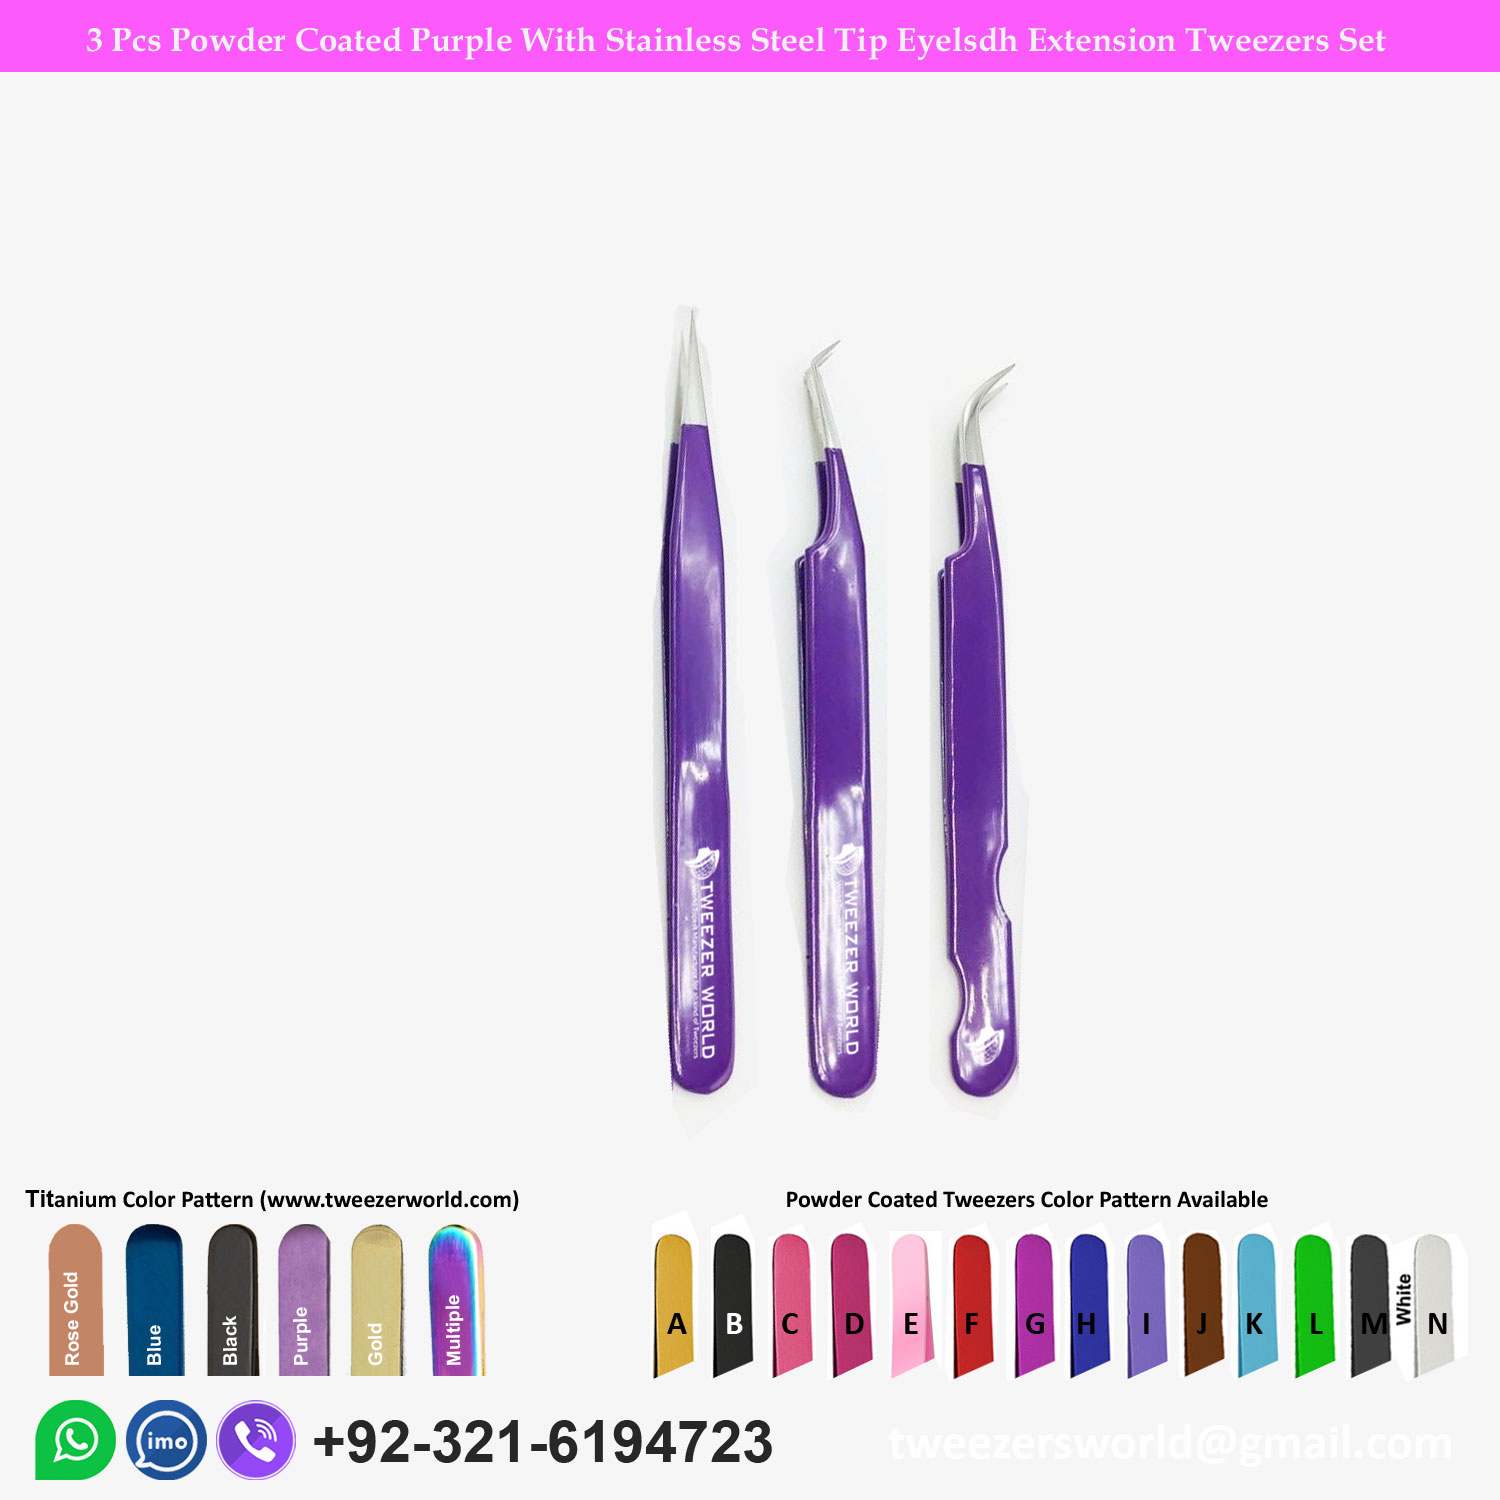 3 Pcs Powder Coated Purple With Stainless Steel Tip Eyelash Extension Tweezers Set